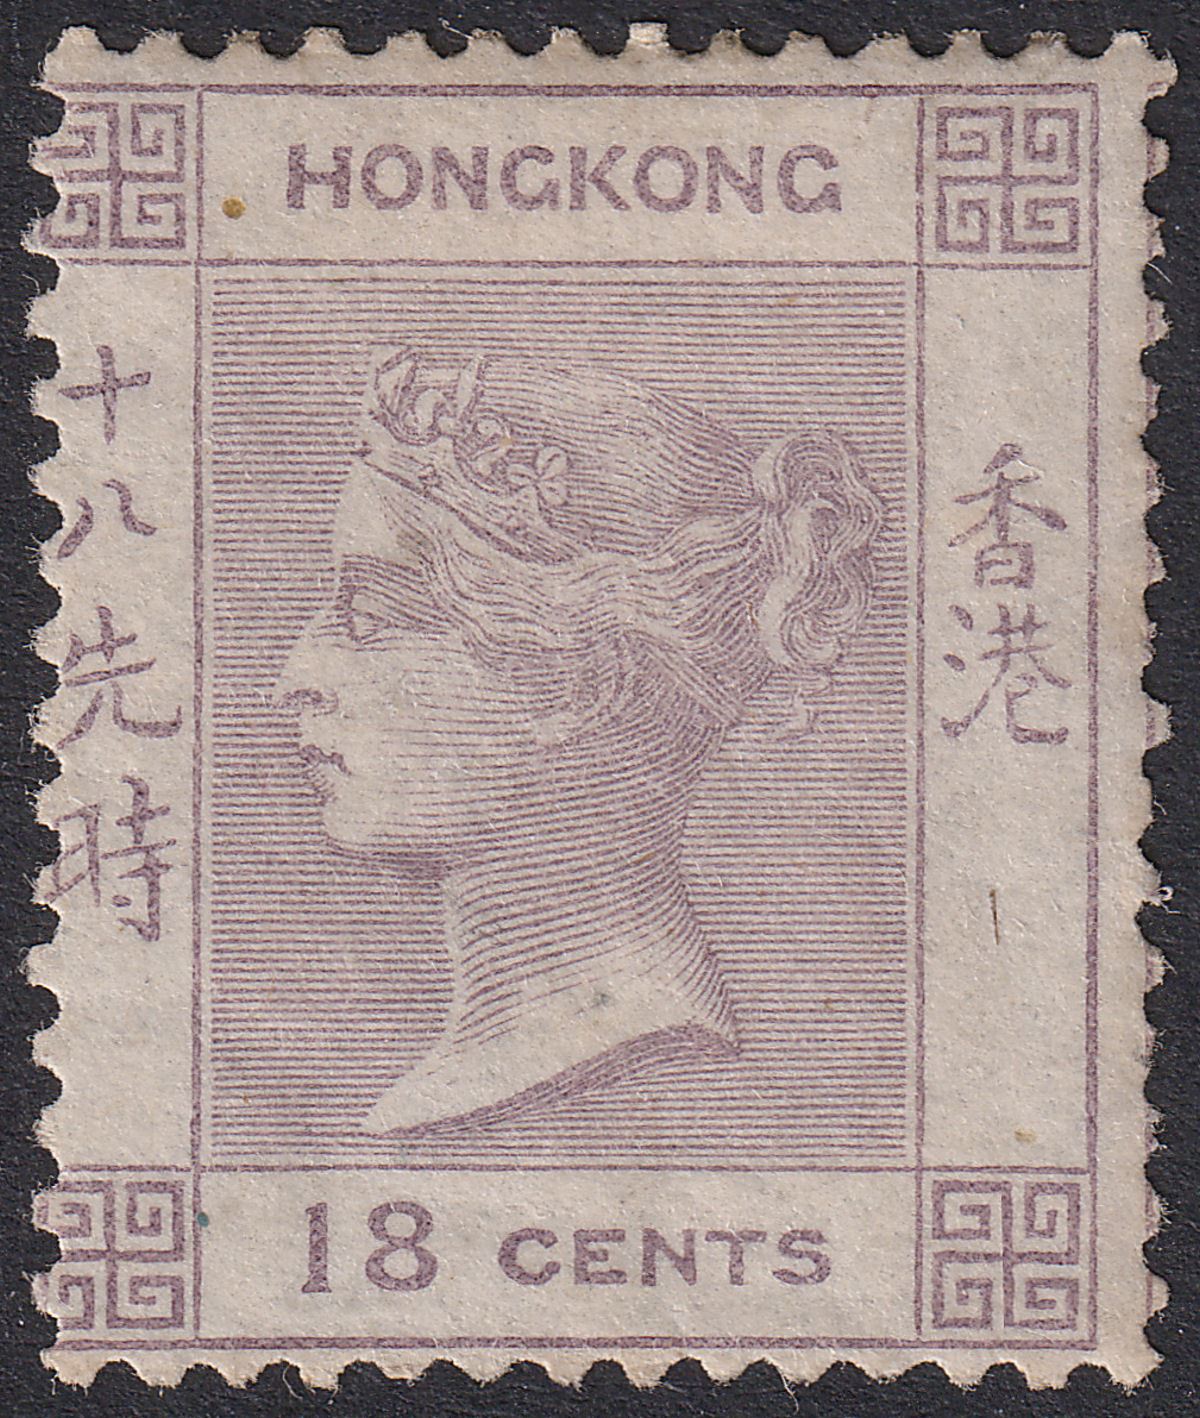 Hong Kong 1862 QV 18c Lilac Unused SG4 cat £650 as mint